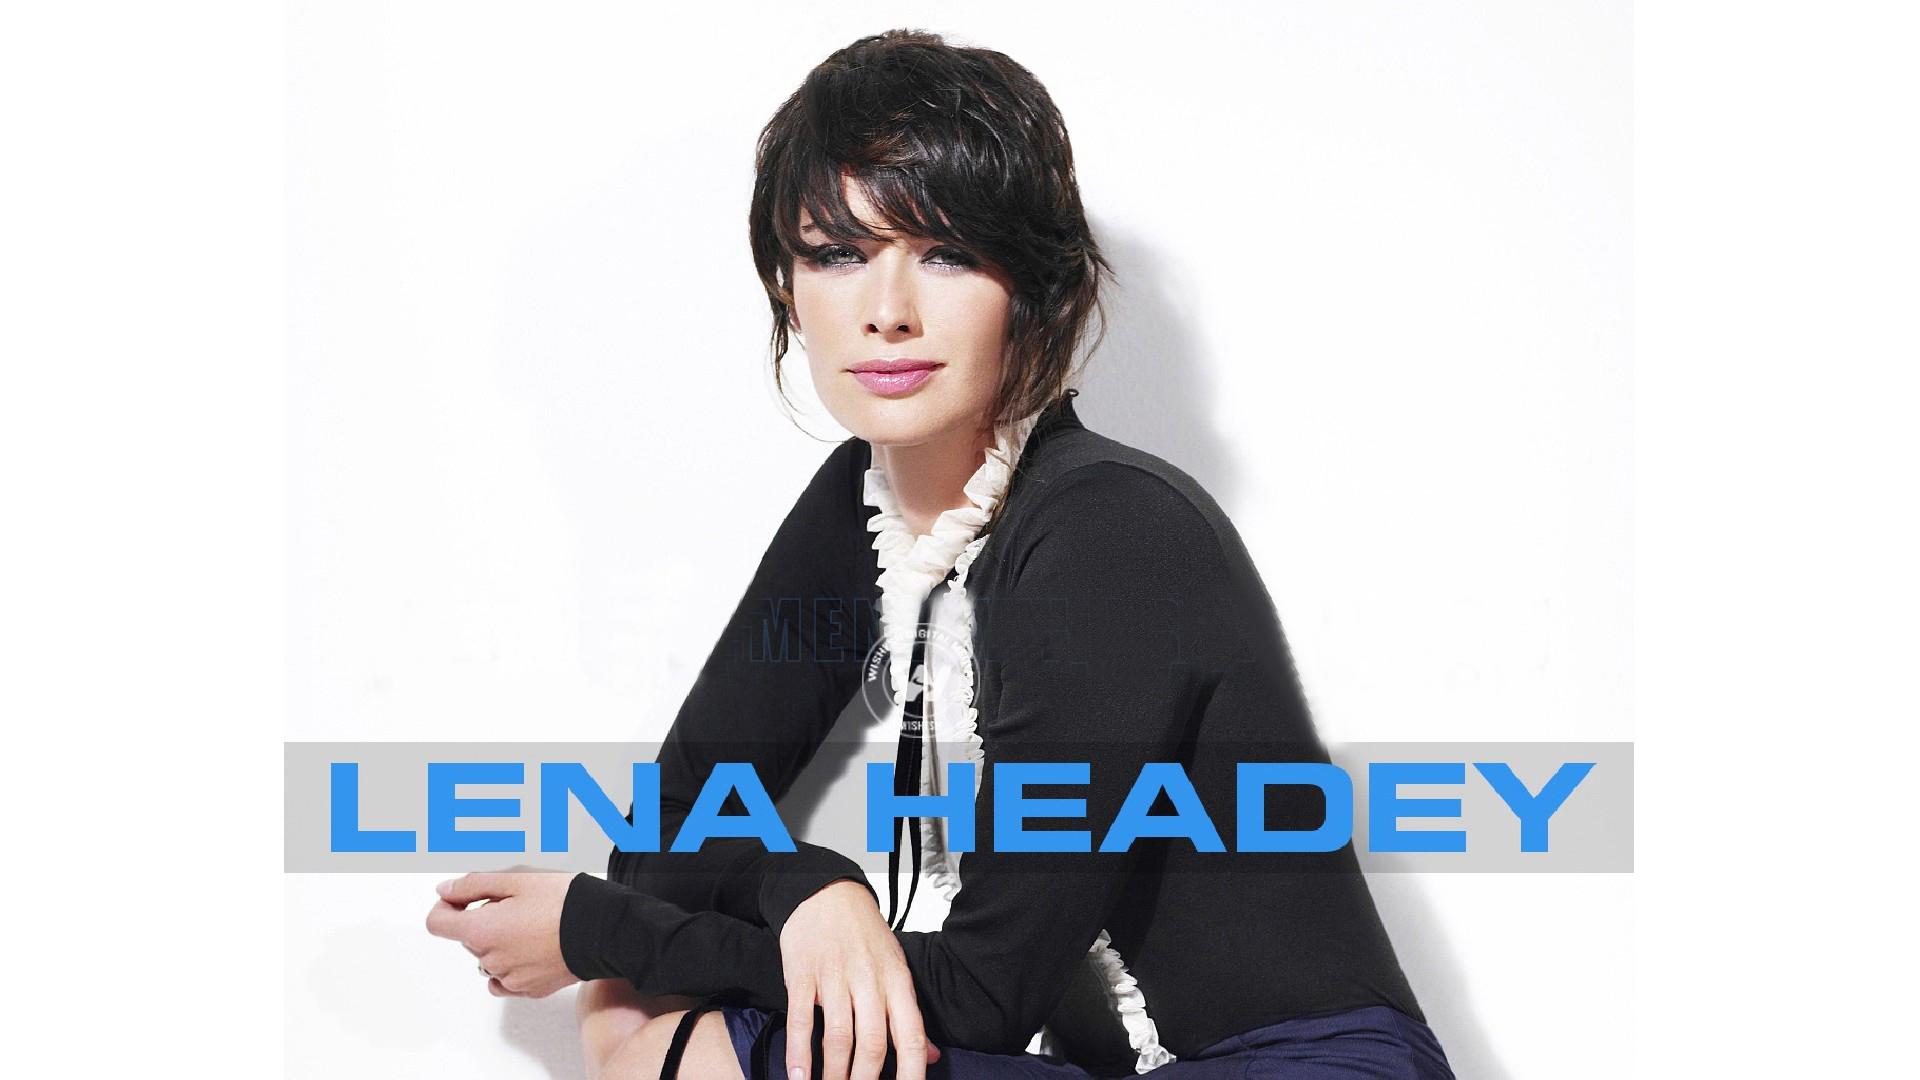 Lena Headey Latest Hot Photos. | Lena Headey Latest Hot Wallpapers | Latest Gorgeous Images of Actress Lena Headey | Wallpaper 5of 10